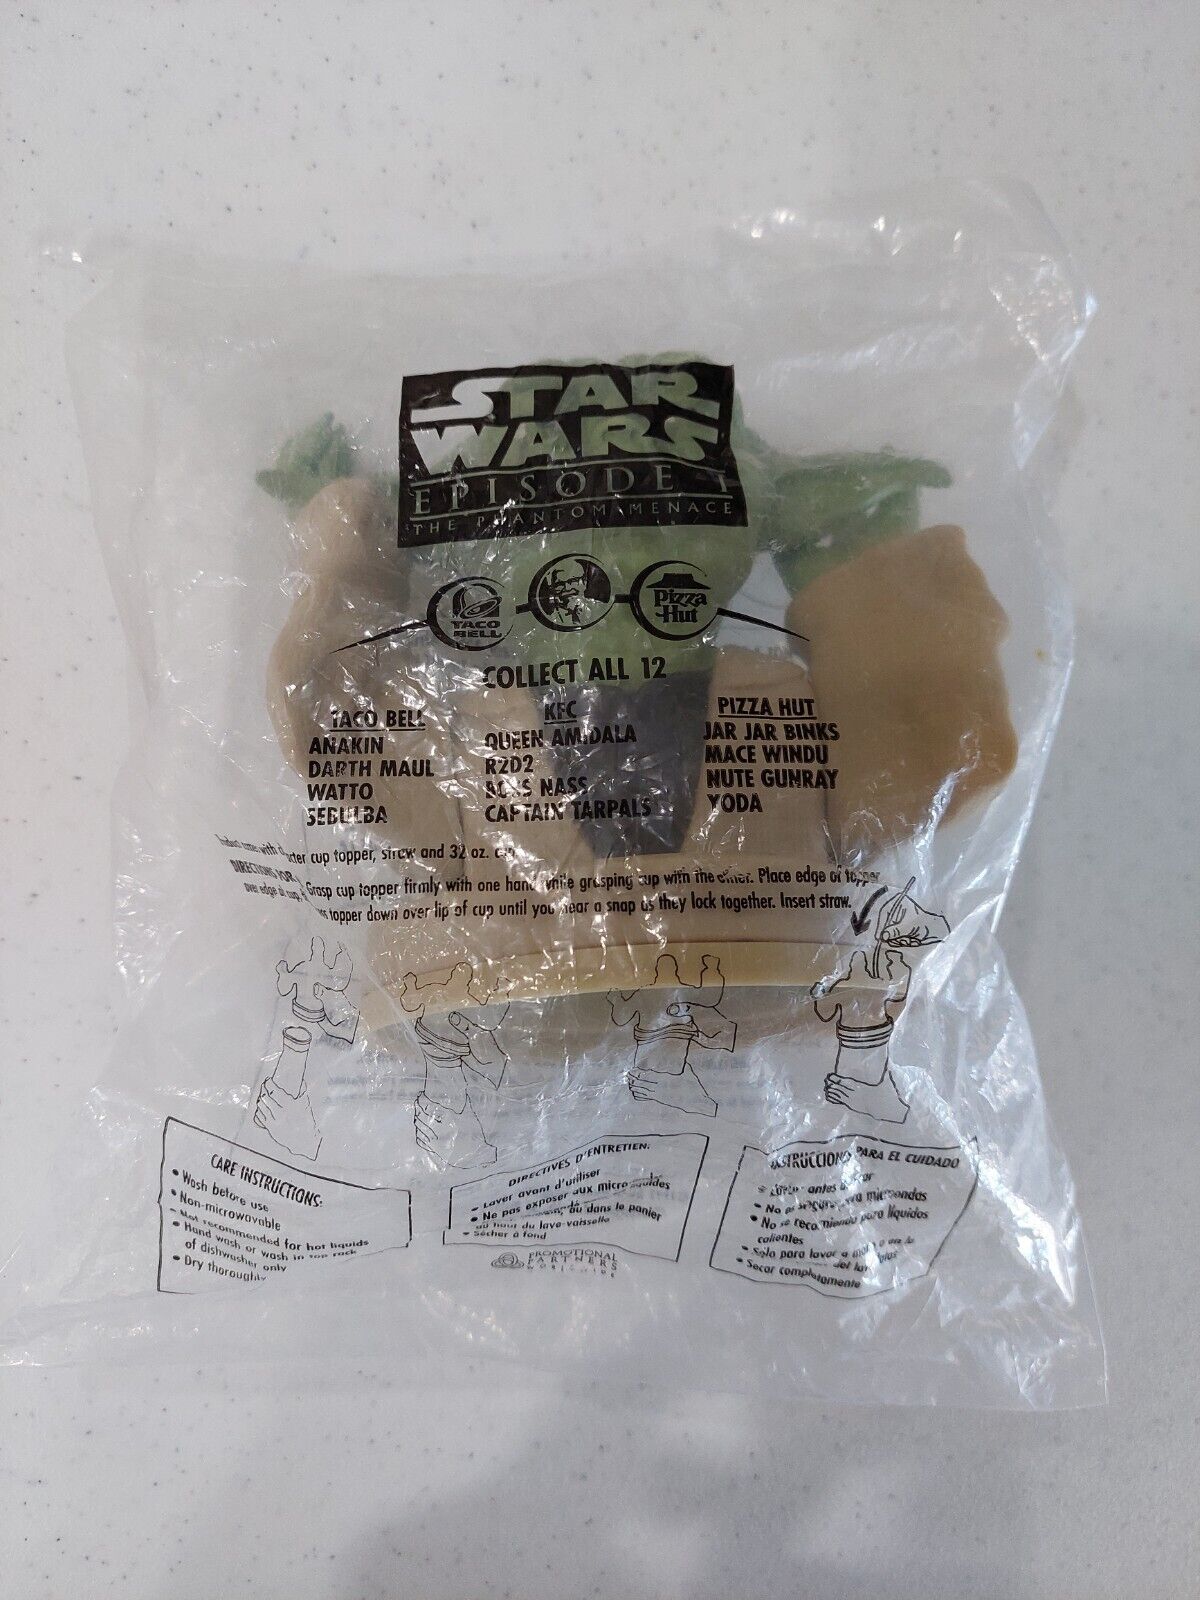 NEW Star Wars Episode 1 Phantom Menace Cup Topper Lid Yoda 1999 KFC *SEALED* Bag